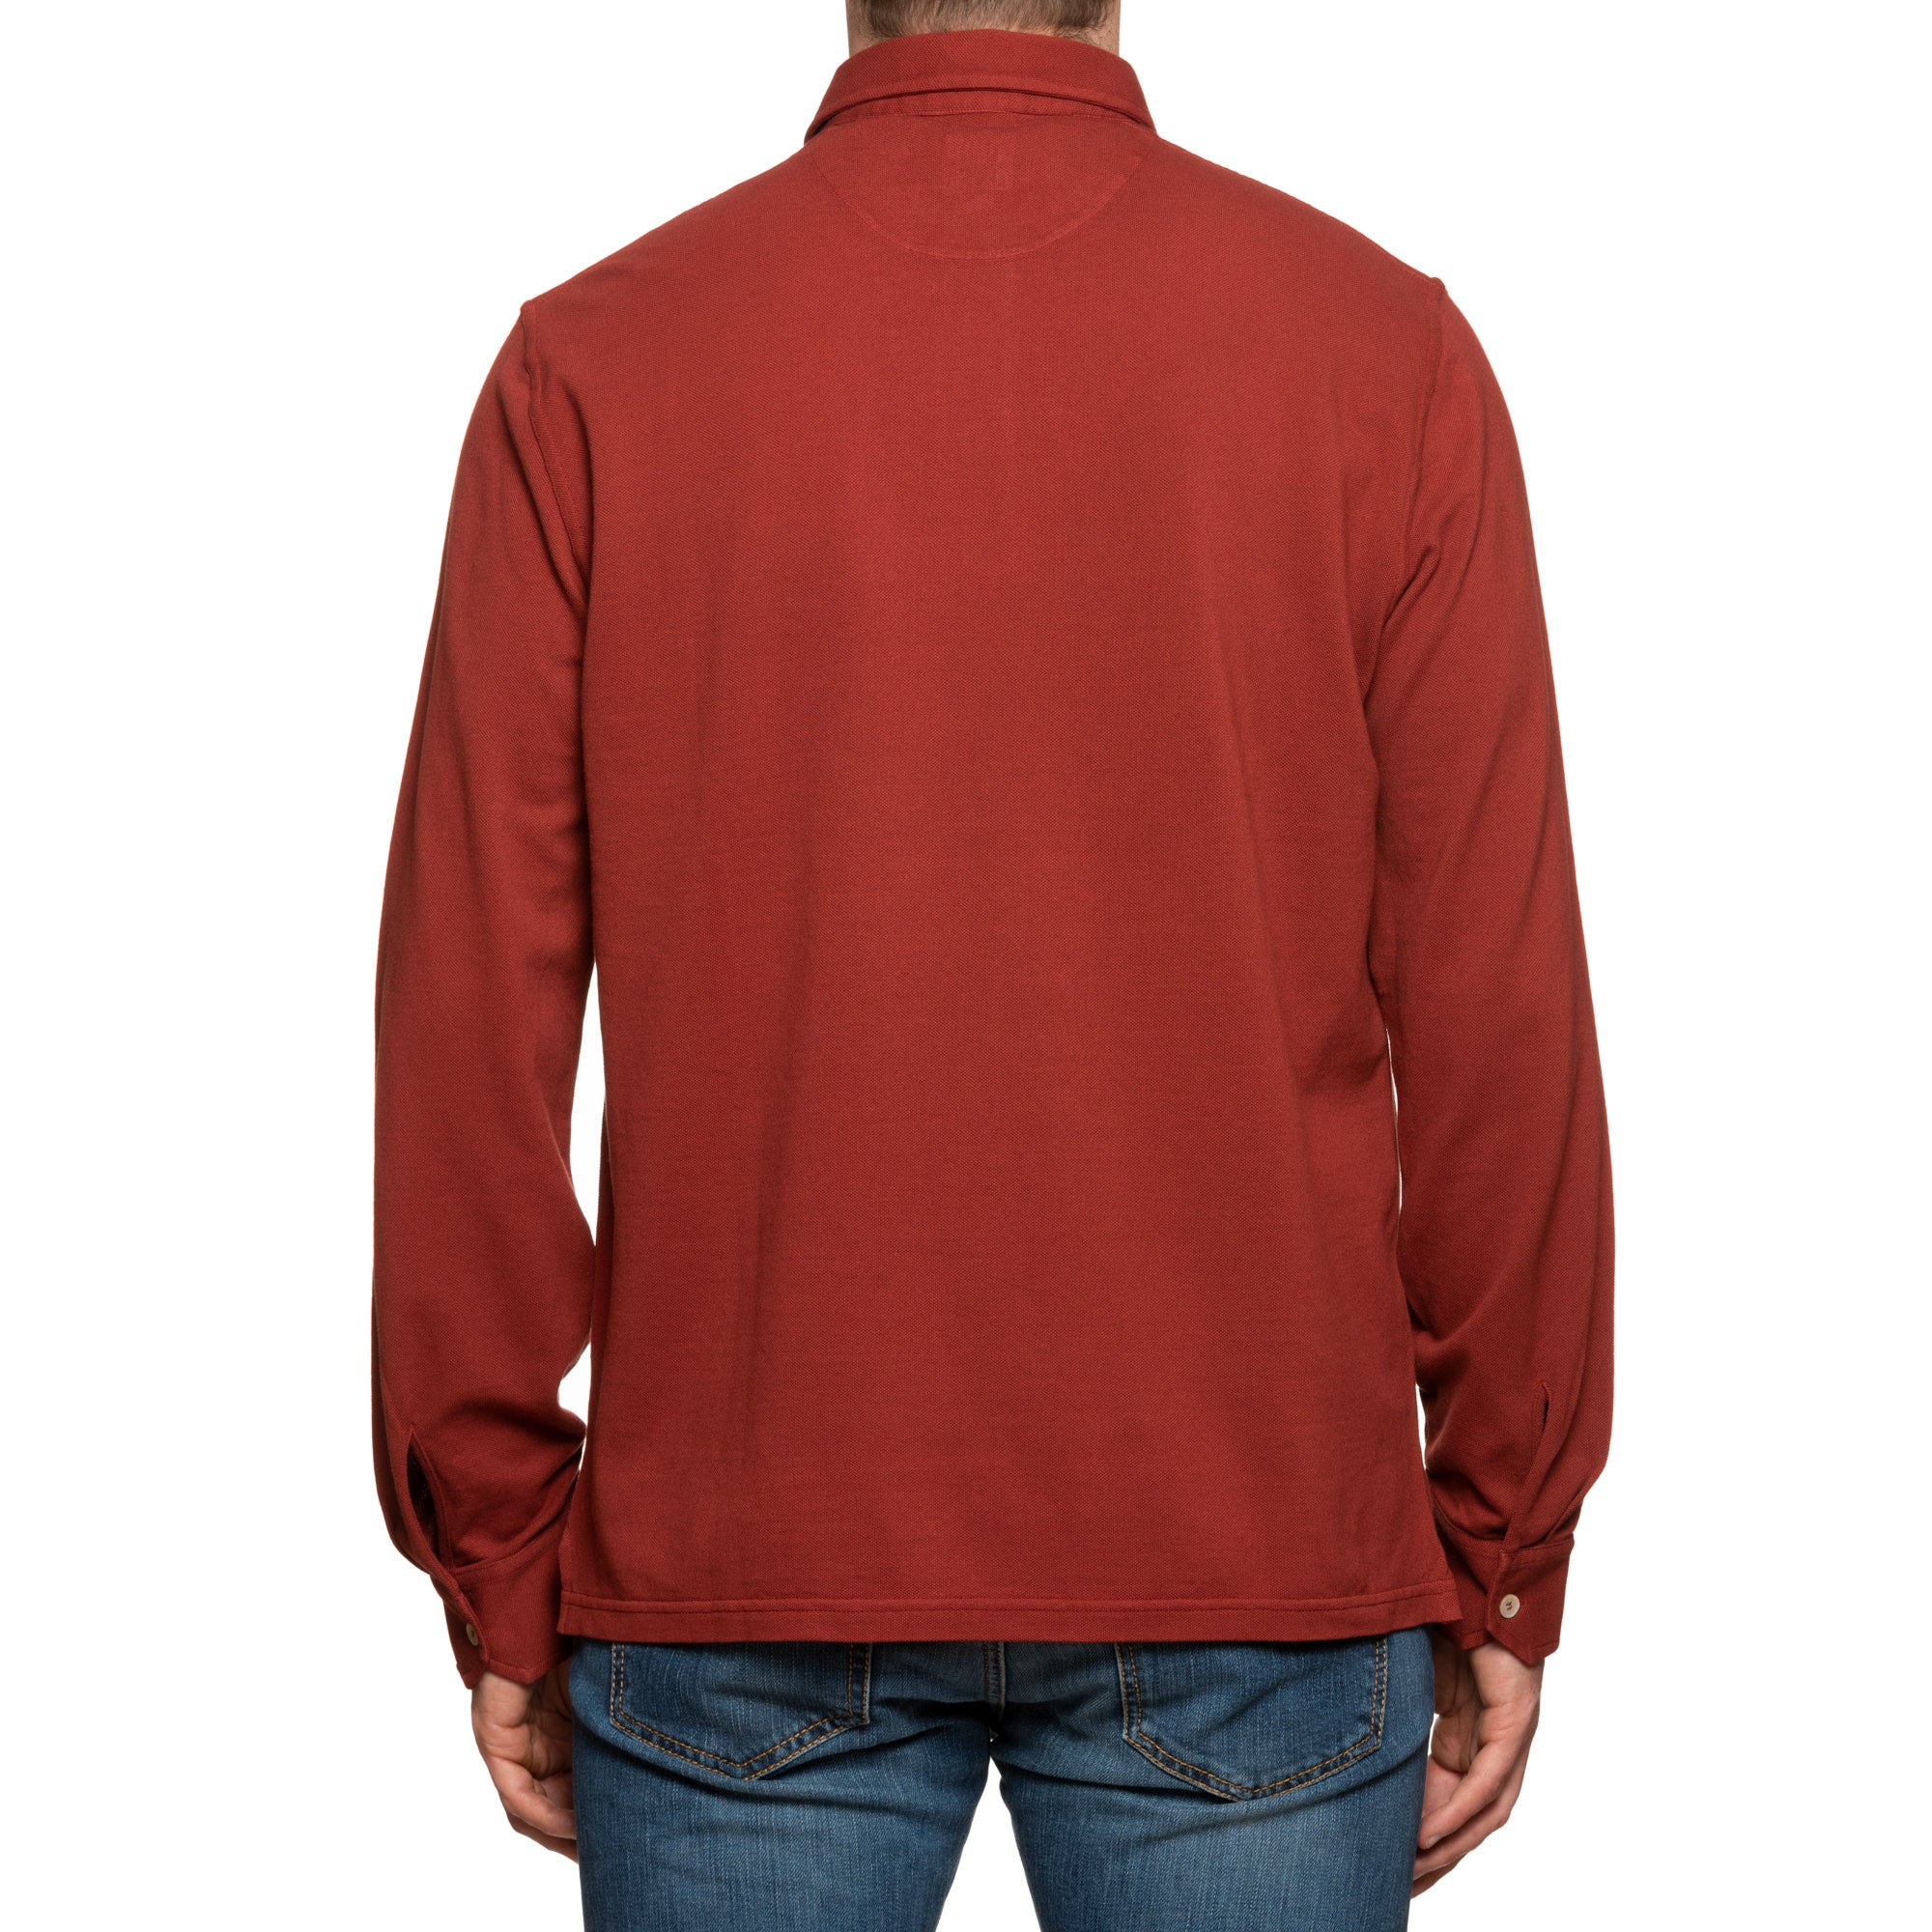 FEDELI "North" Solid Brick Red Cotton Pique Long Sleeve Polo Shirt EU 54 NEW US XL